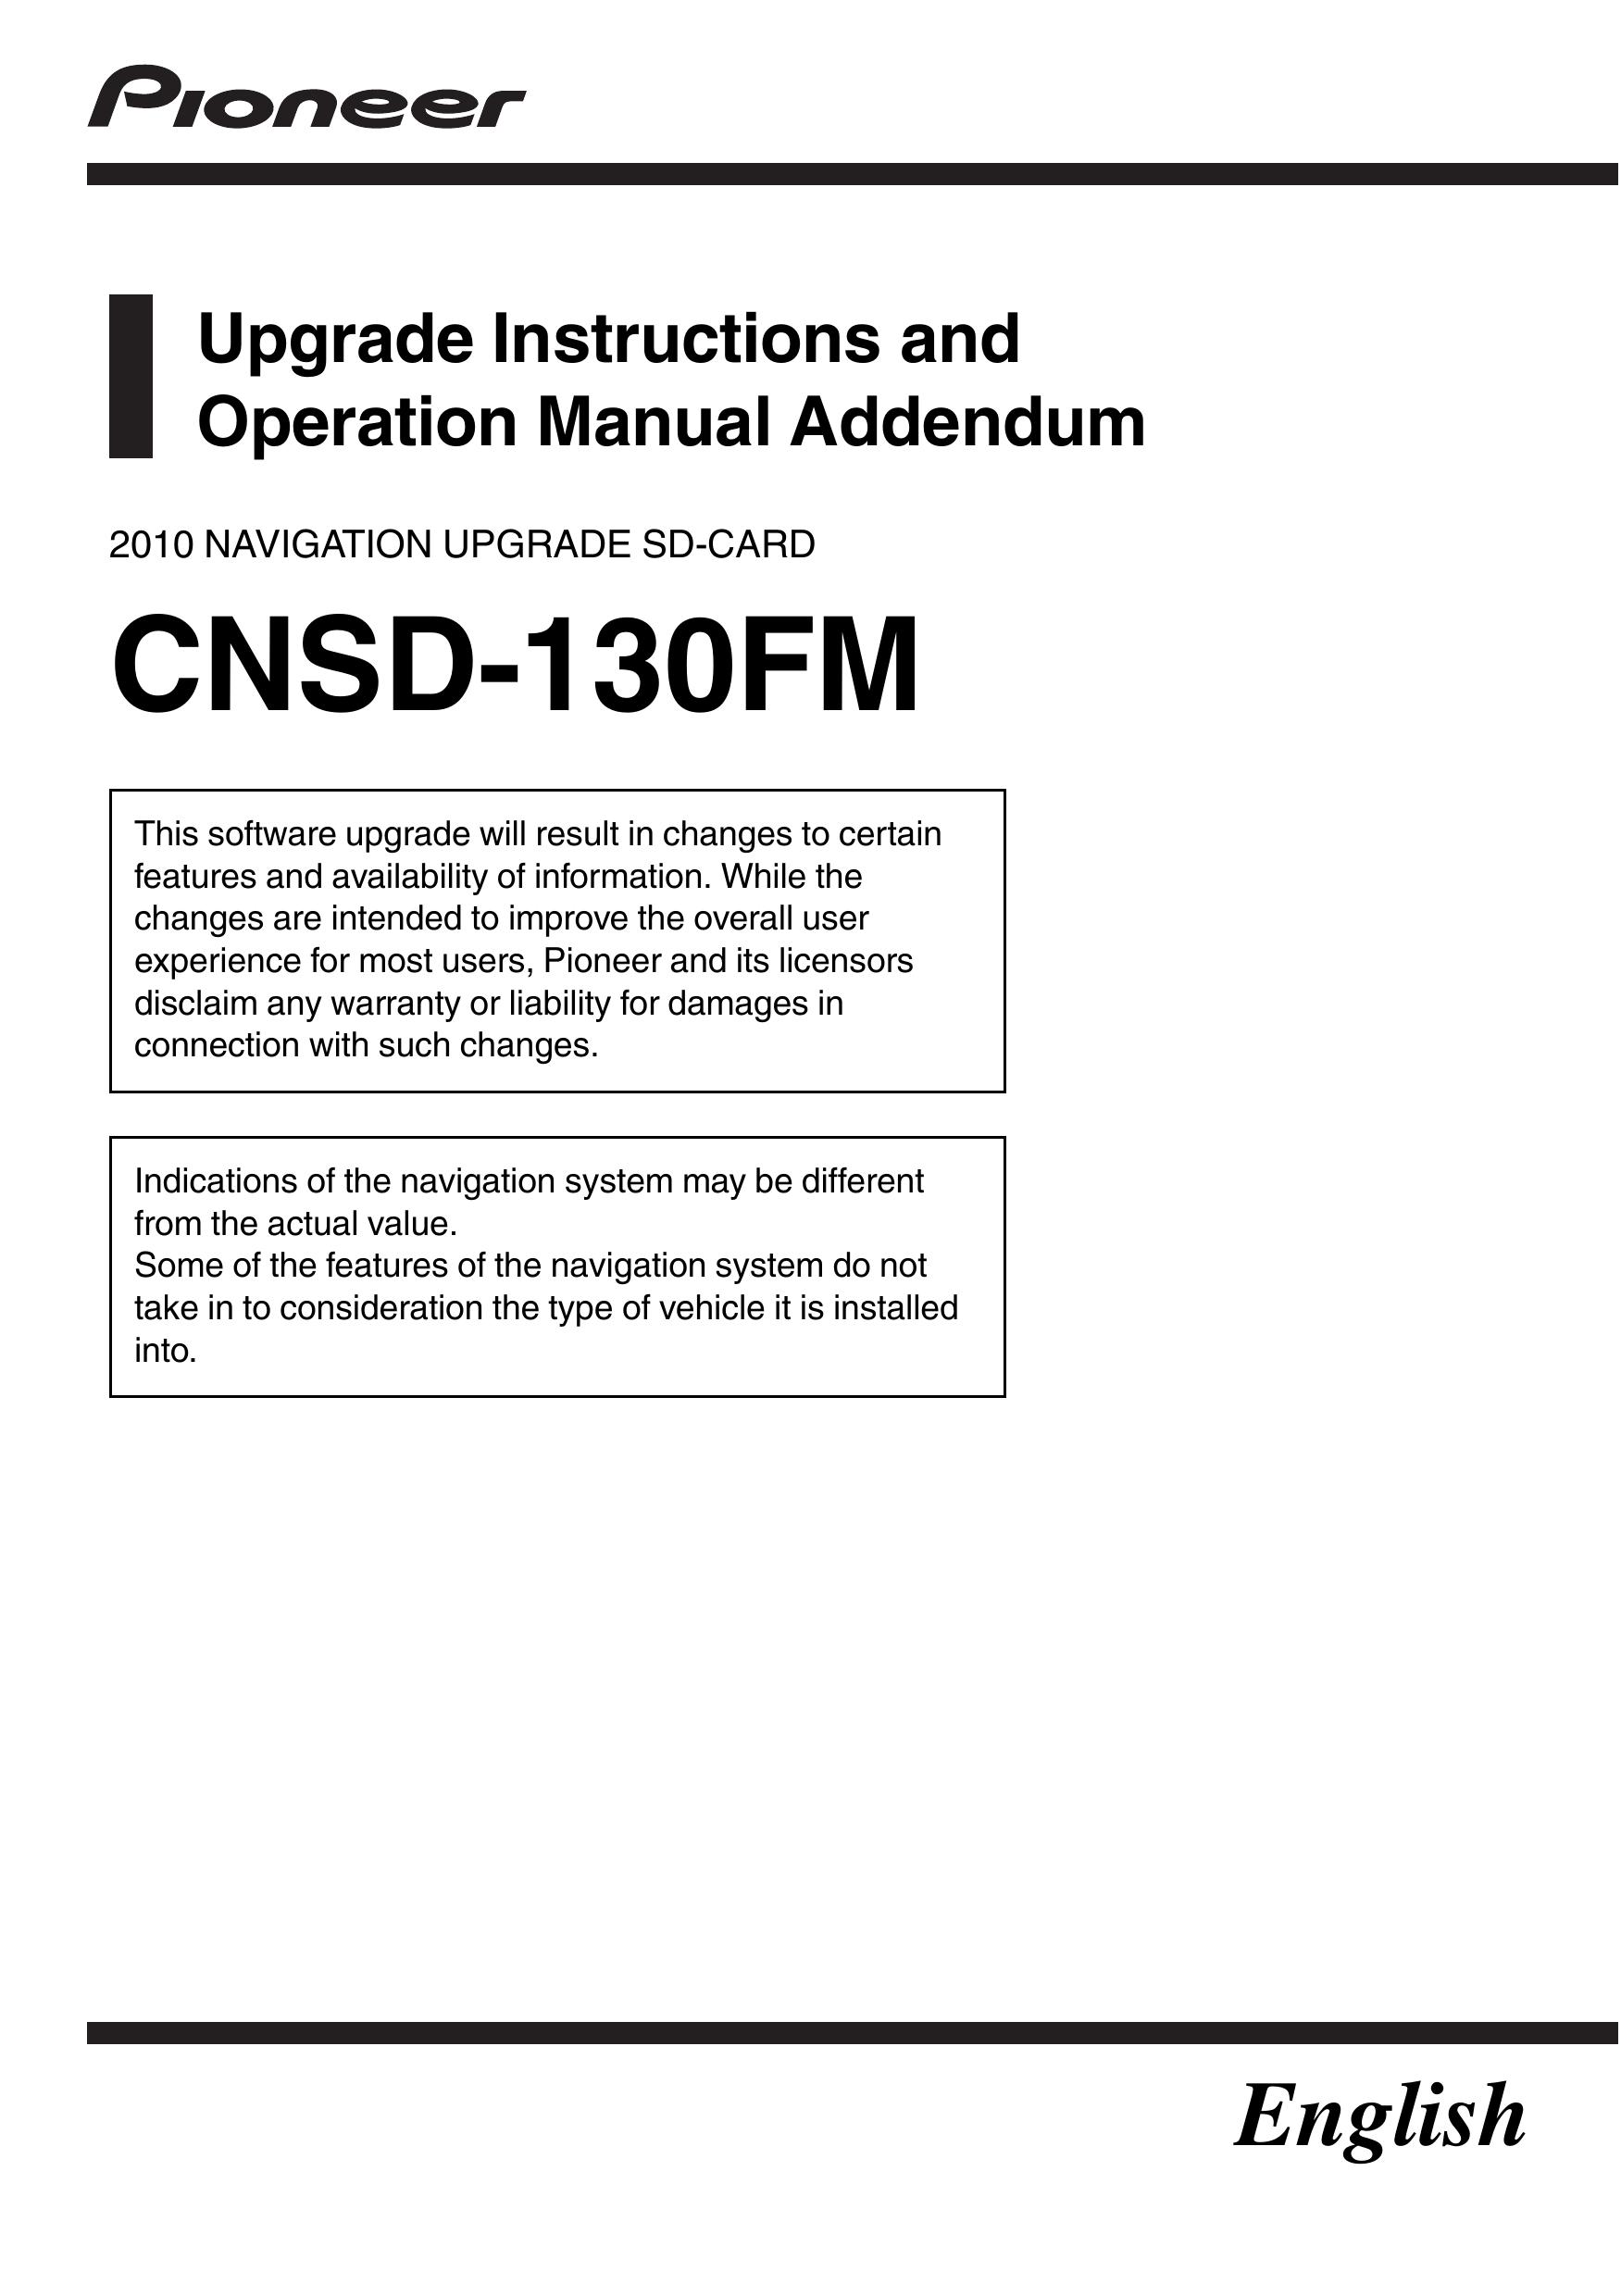 Pioneer CNSD-130FM Camera Accessories User Manual